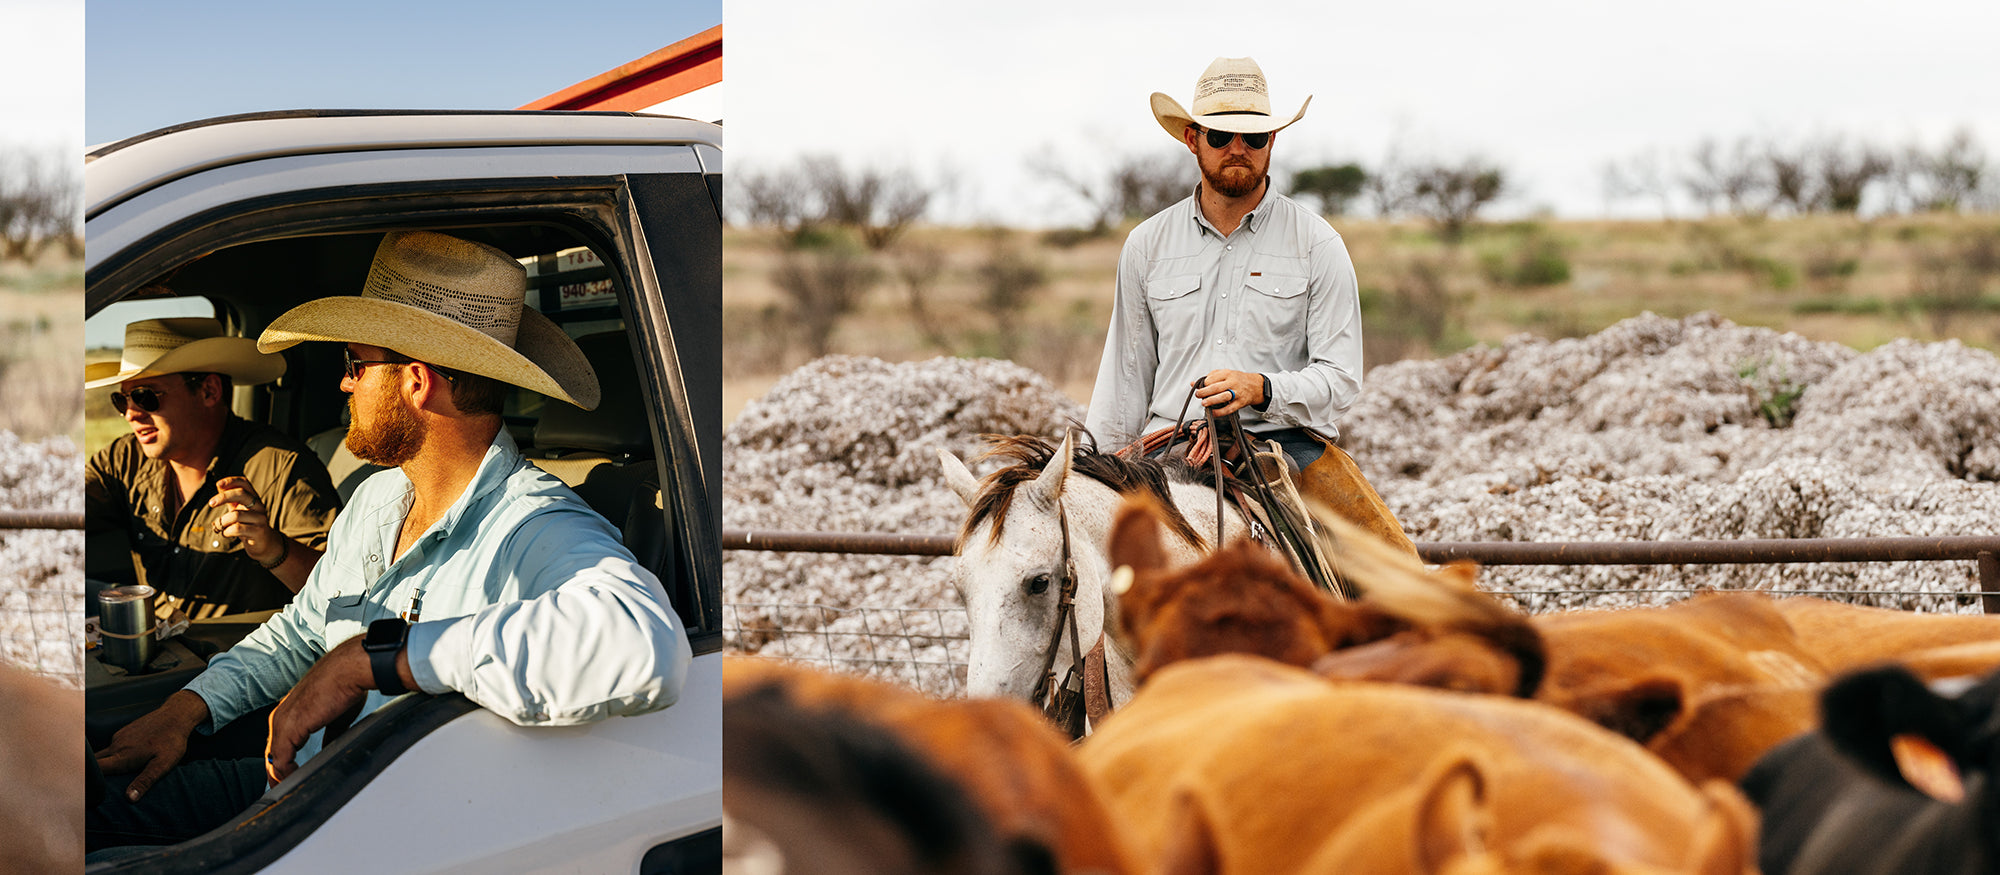 stockyard farm shirt ranch shirt horse cowboy work shirt bull riding rodeo